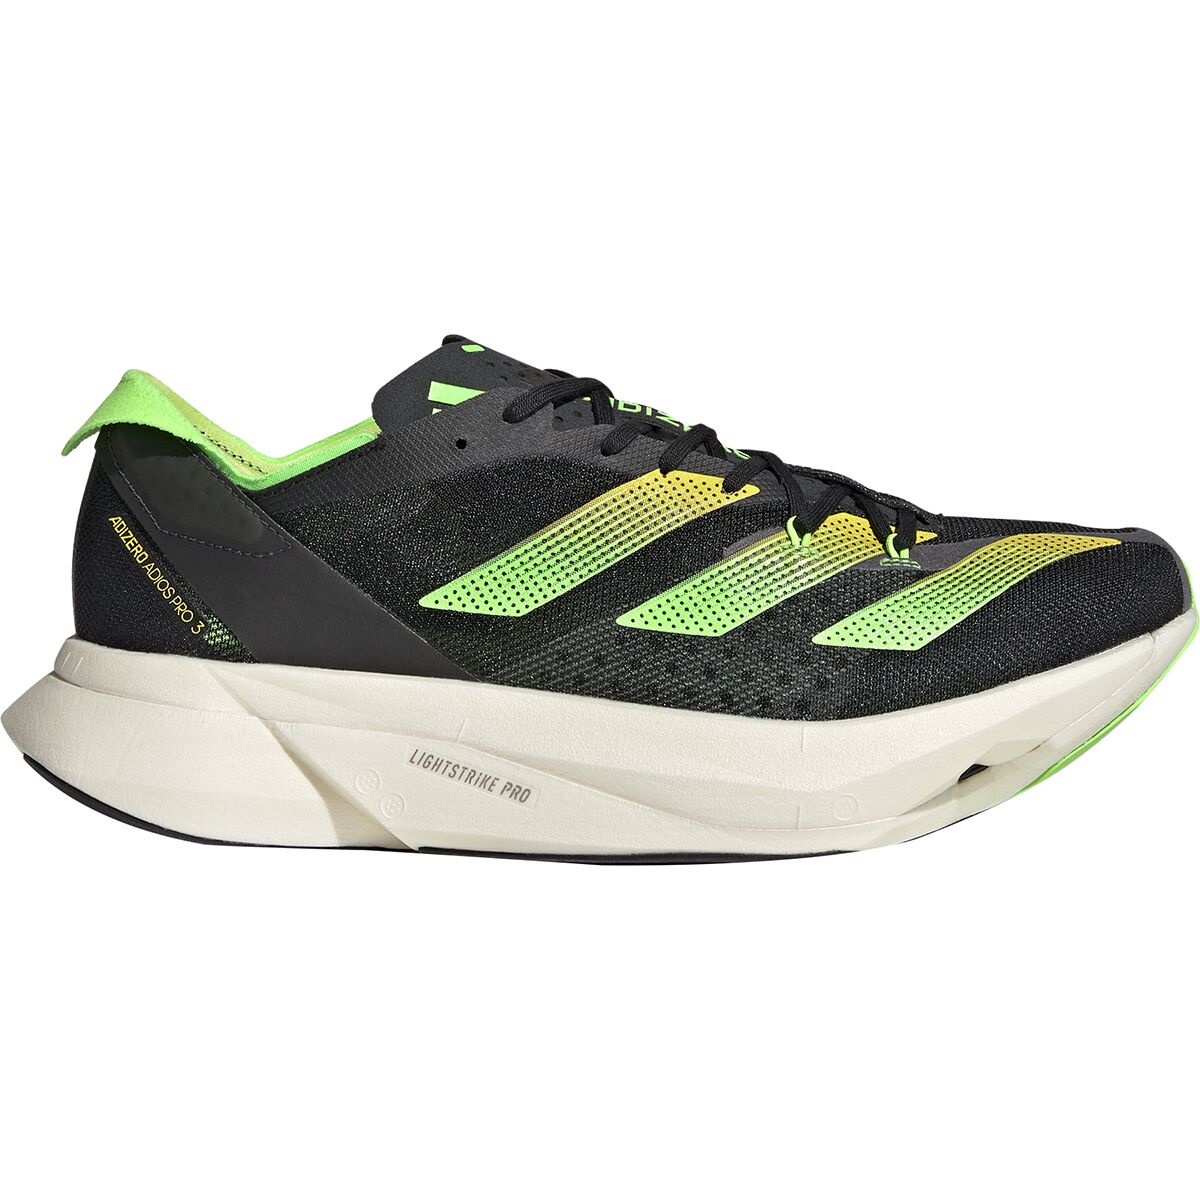 Adidas Adizero Adios Pro 3 Running Shoe - Men's